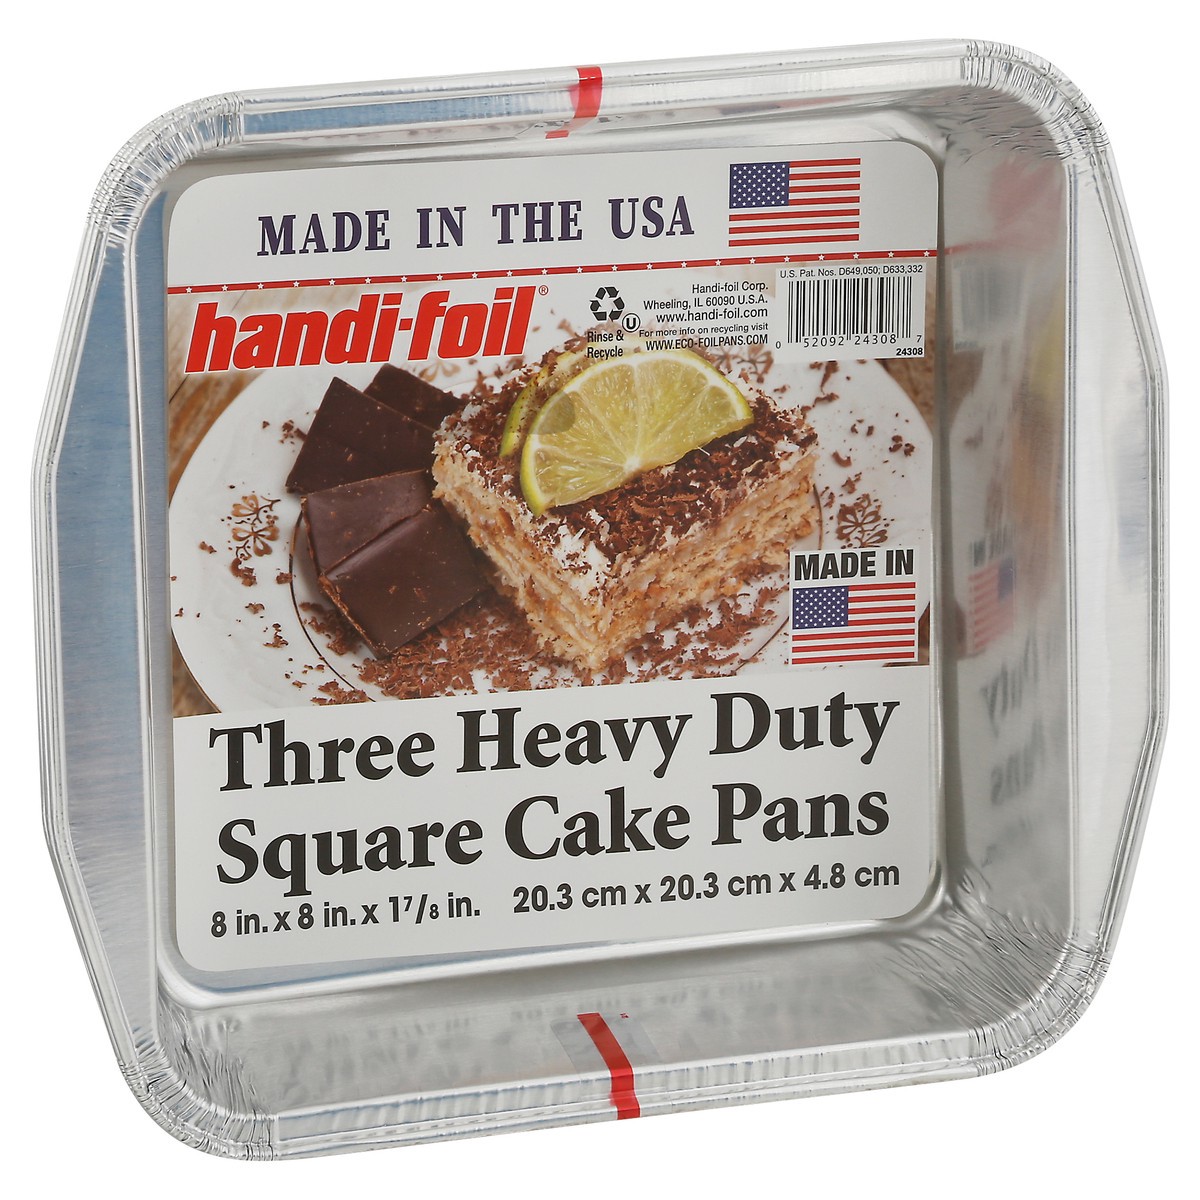 slide 2 of 9, Handi-foil Heavy Duty Square Cake Pans 3 ea, 3 ct